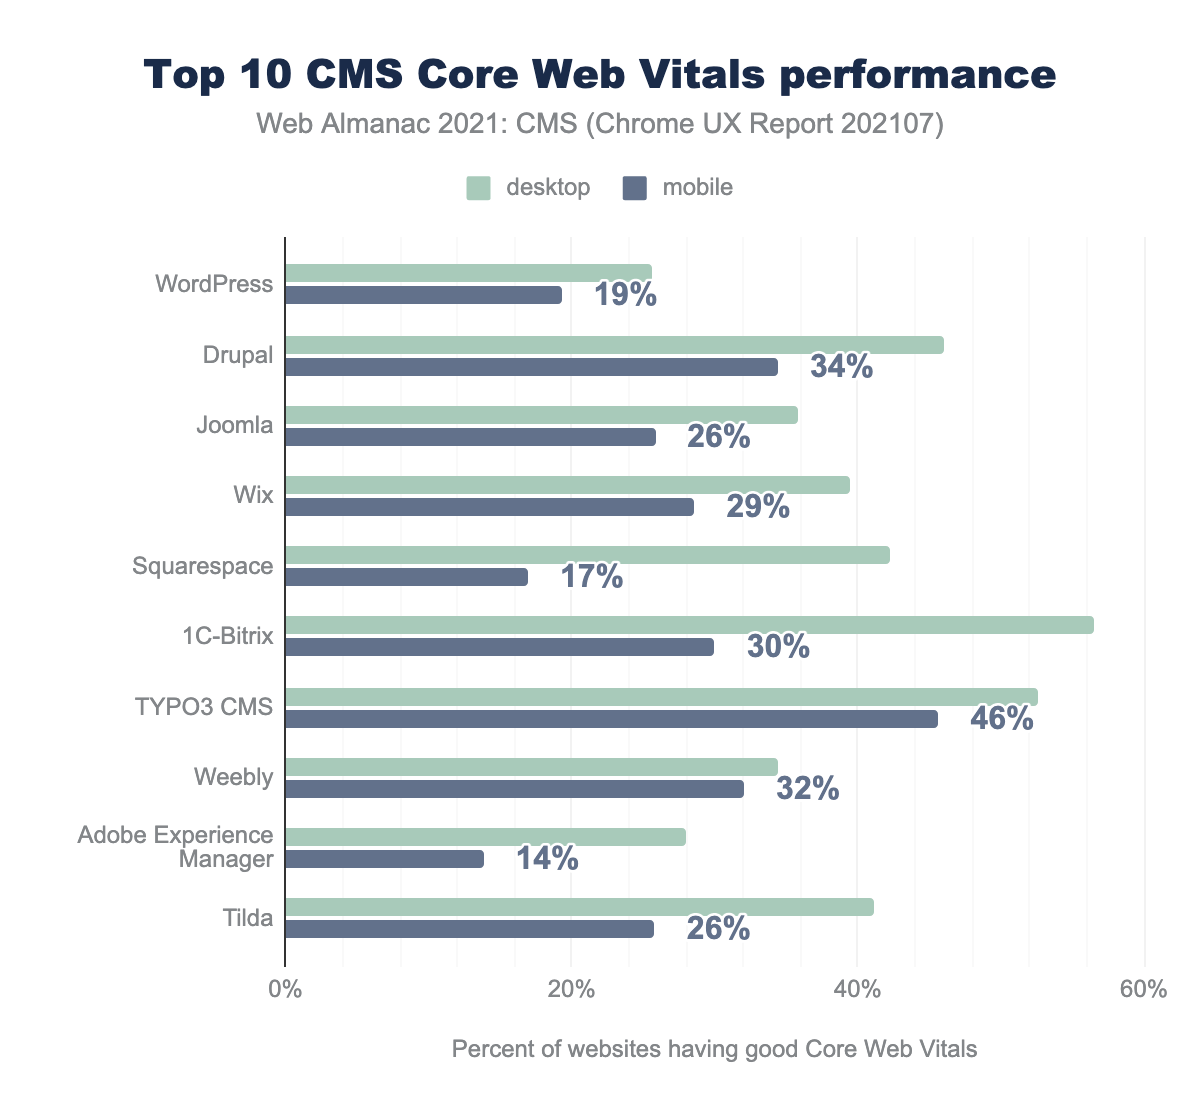 Top 10 CMSs core web vitals performance.